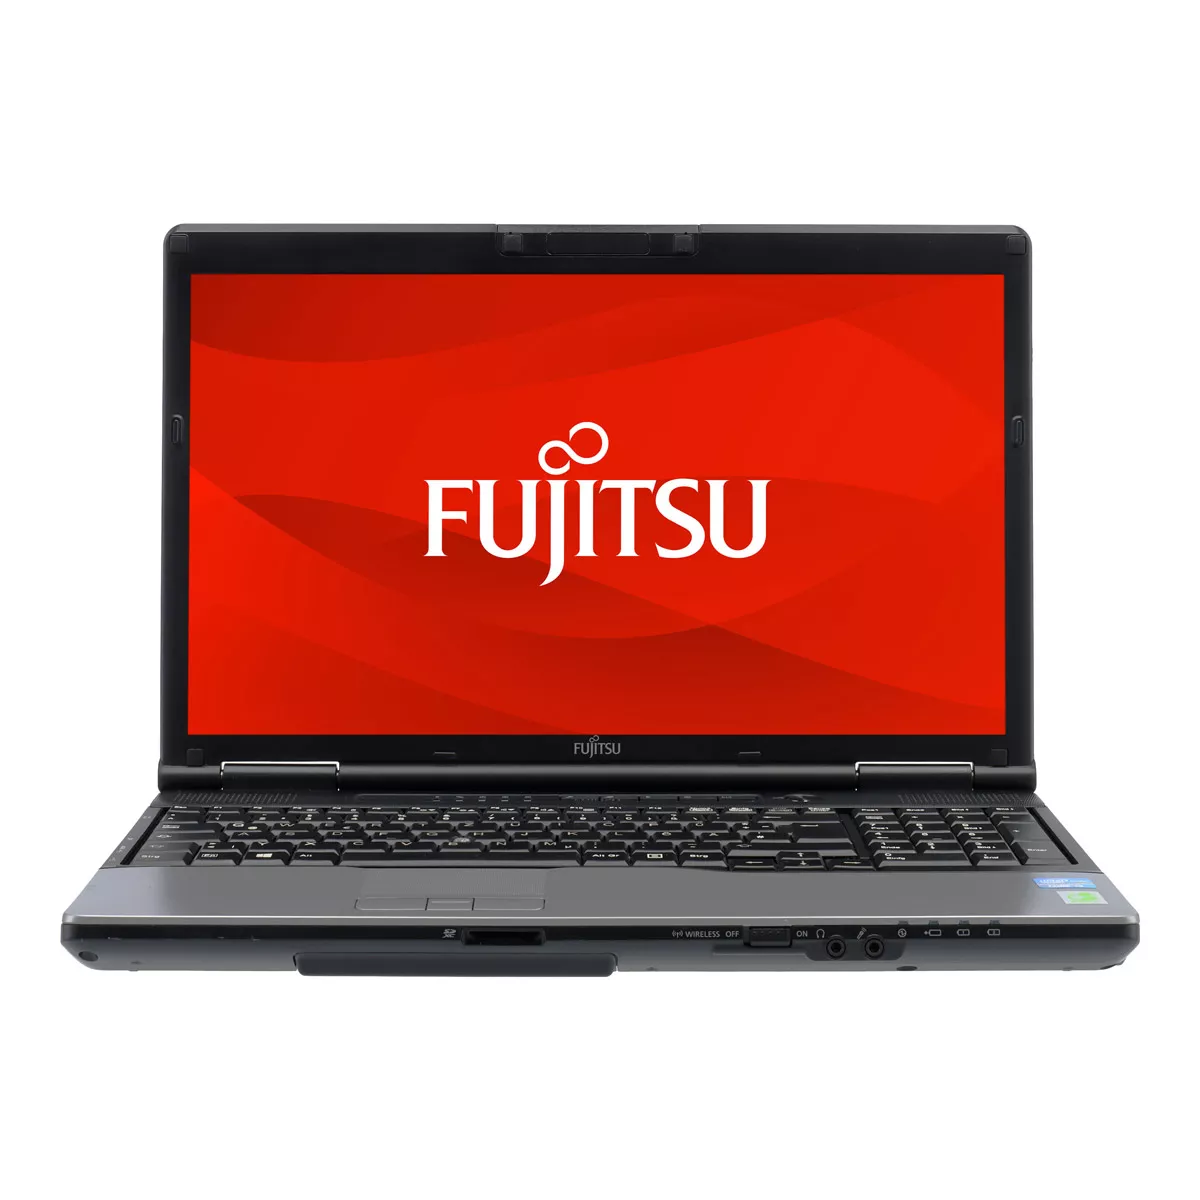 Fujitsu Lifebook E752 Core i3 3110M 2,40 GHz A+